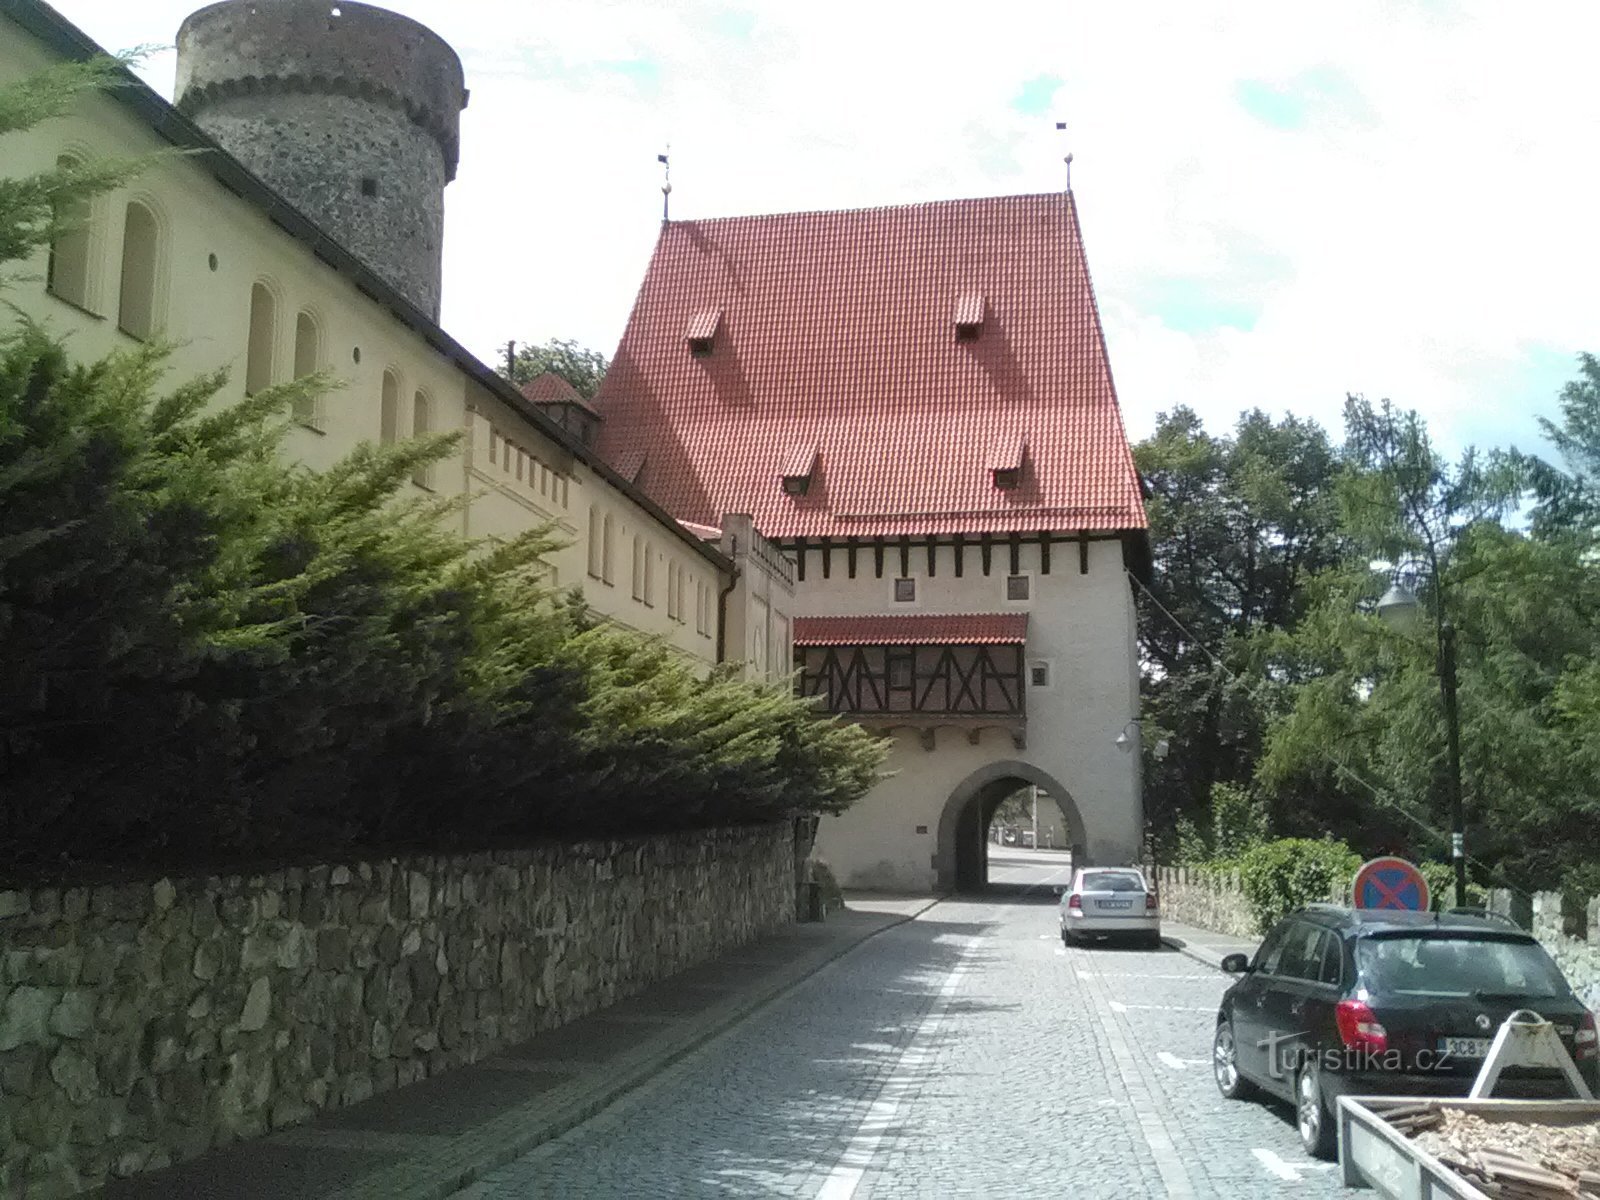 Bechynská vrata in Kotnov stolp